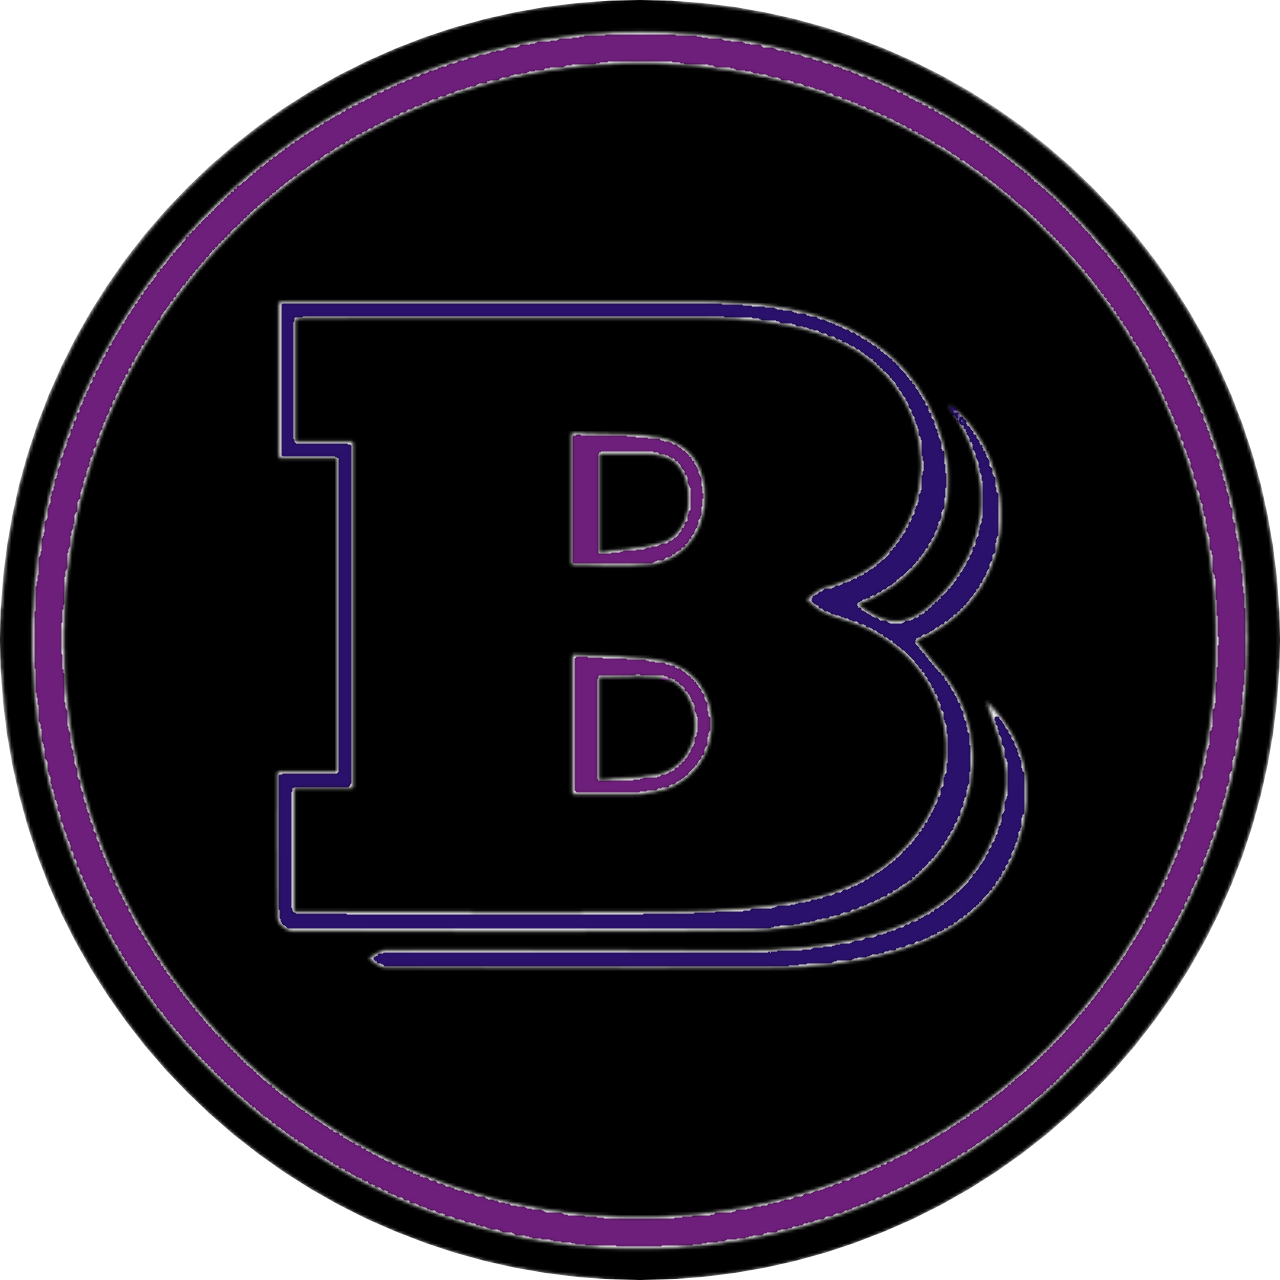 Brabus Logo With My Texture by PashaKemer on DeviantArt